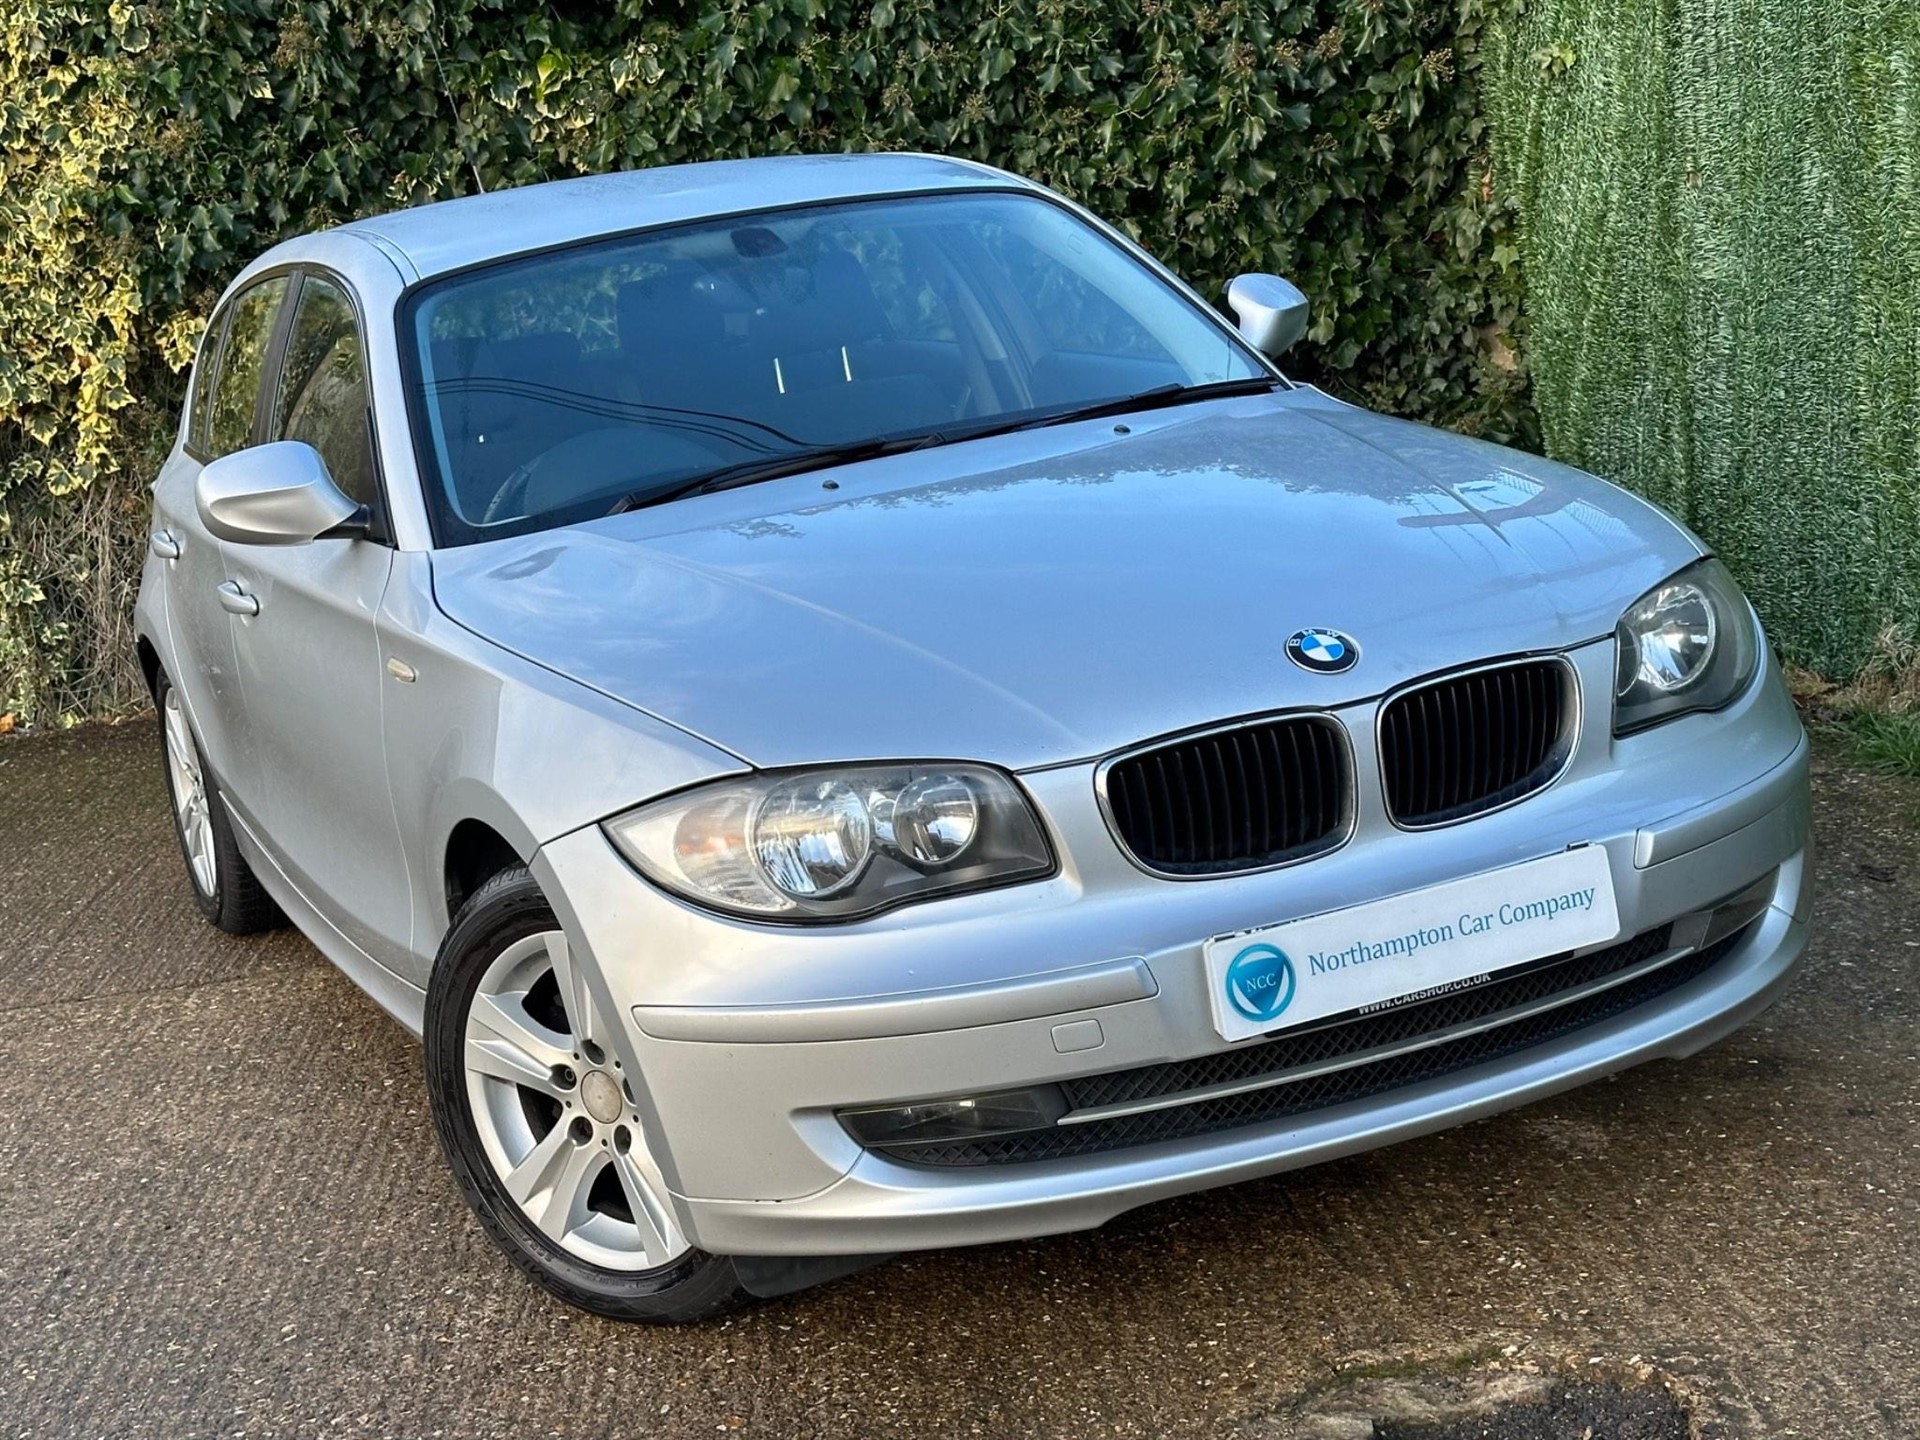 Used BMW 116i for sale in Northampton, Northamptonshire